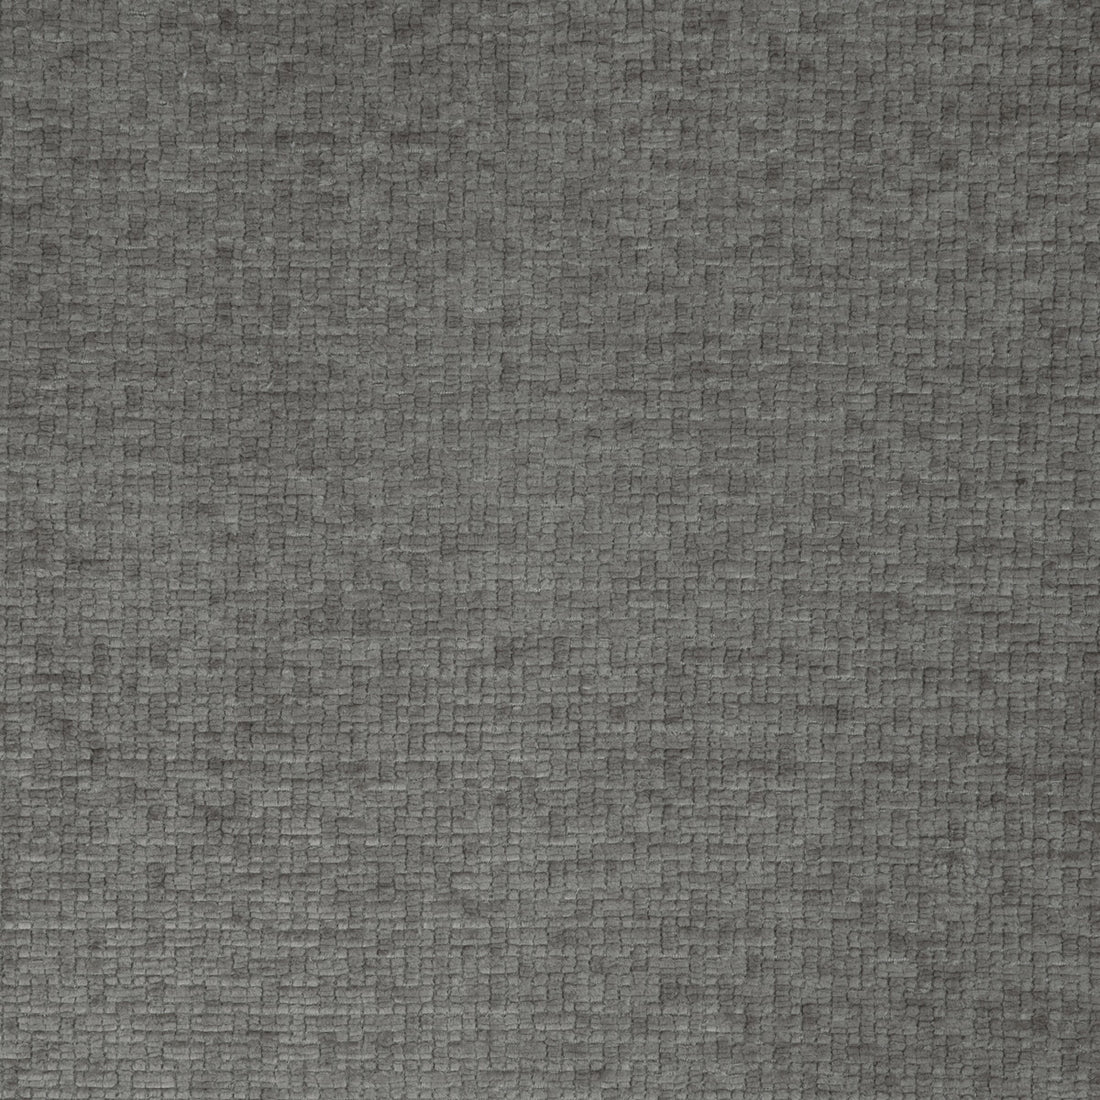 Kravet Smart fabric in 36993-1121 color - pattern 36993.1121.0 - by Kravet Smart in the Performance Kravetarmor collection